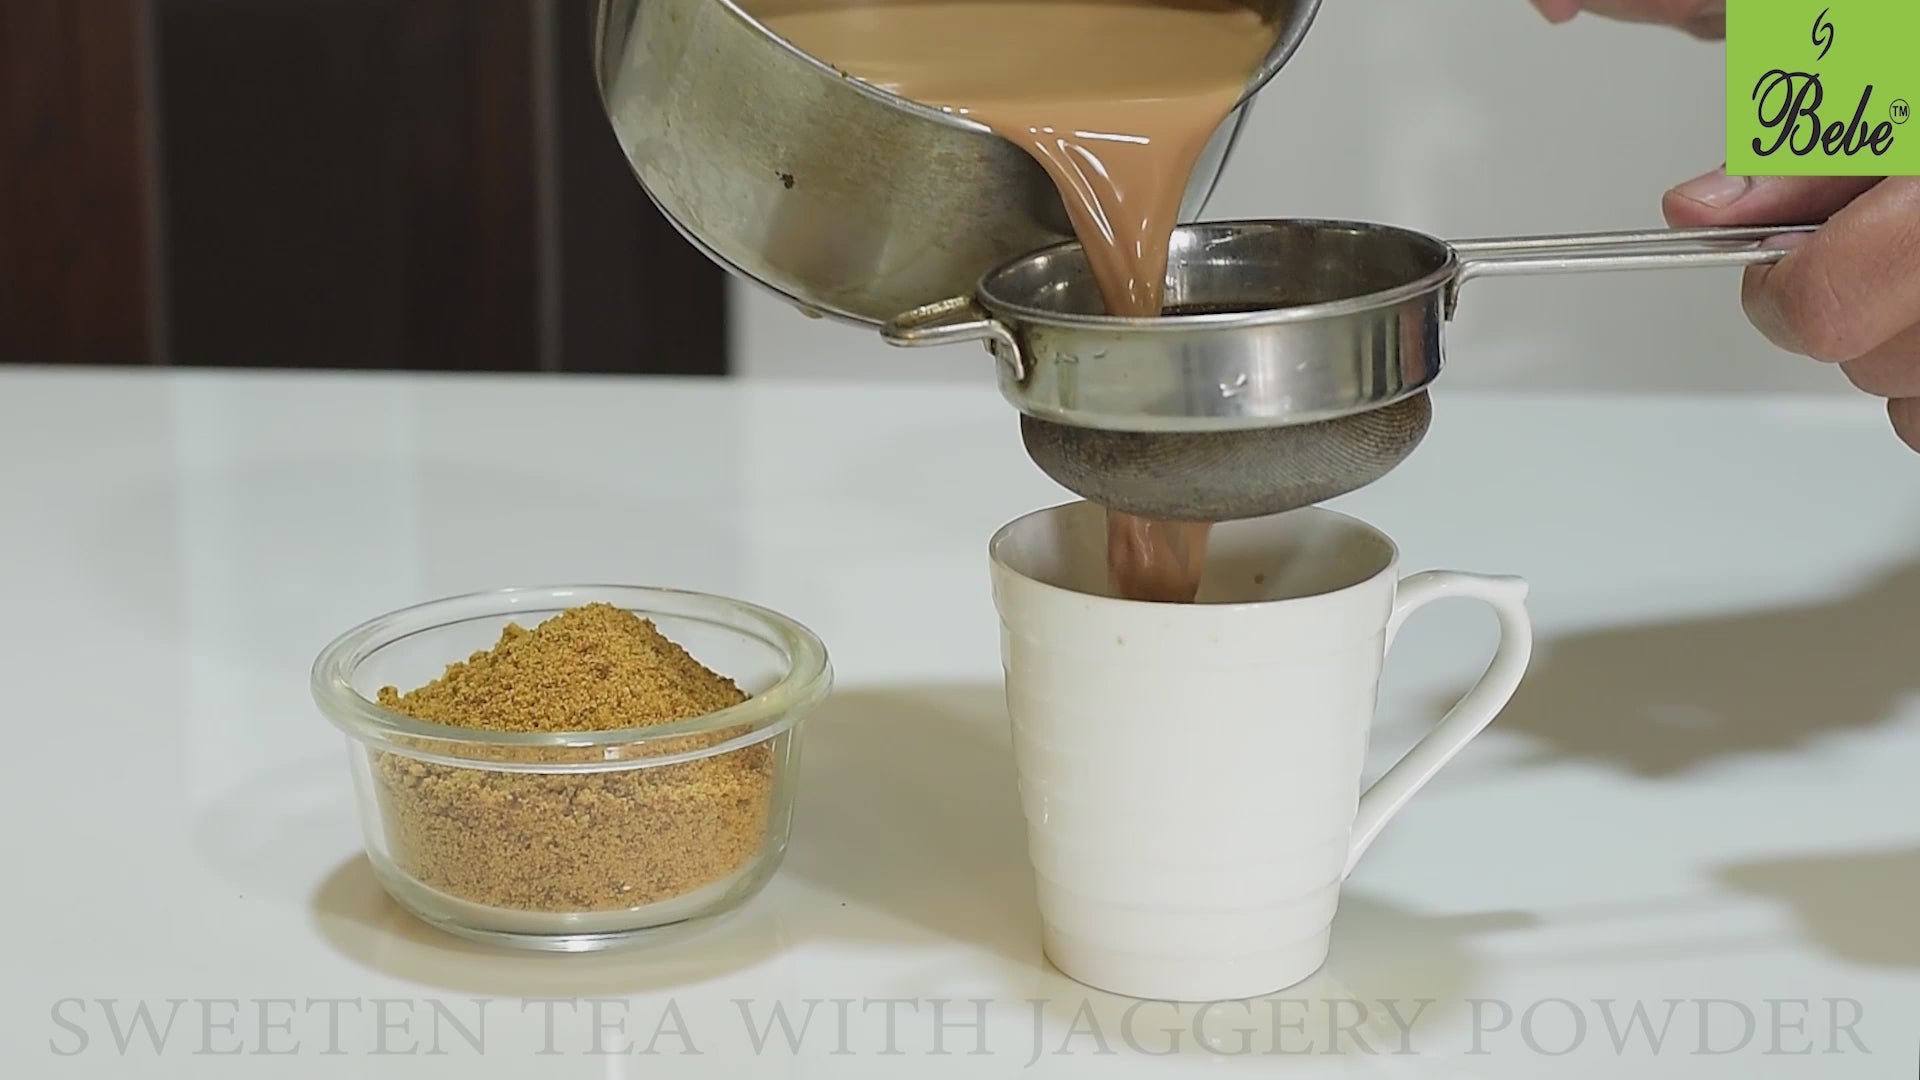 Video of Usage Bebe Jaggery Powder | Shakker | Shakkar | Recipe from Jaggery Powder | Healthy Sugar Sweetener | Kheer | Payasam | Relish with Ghee, Curd